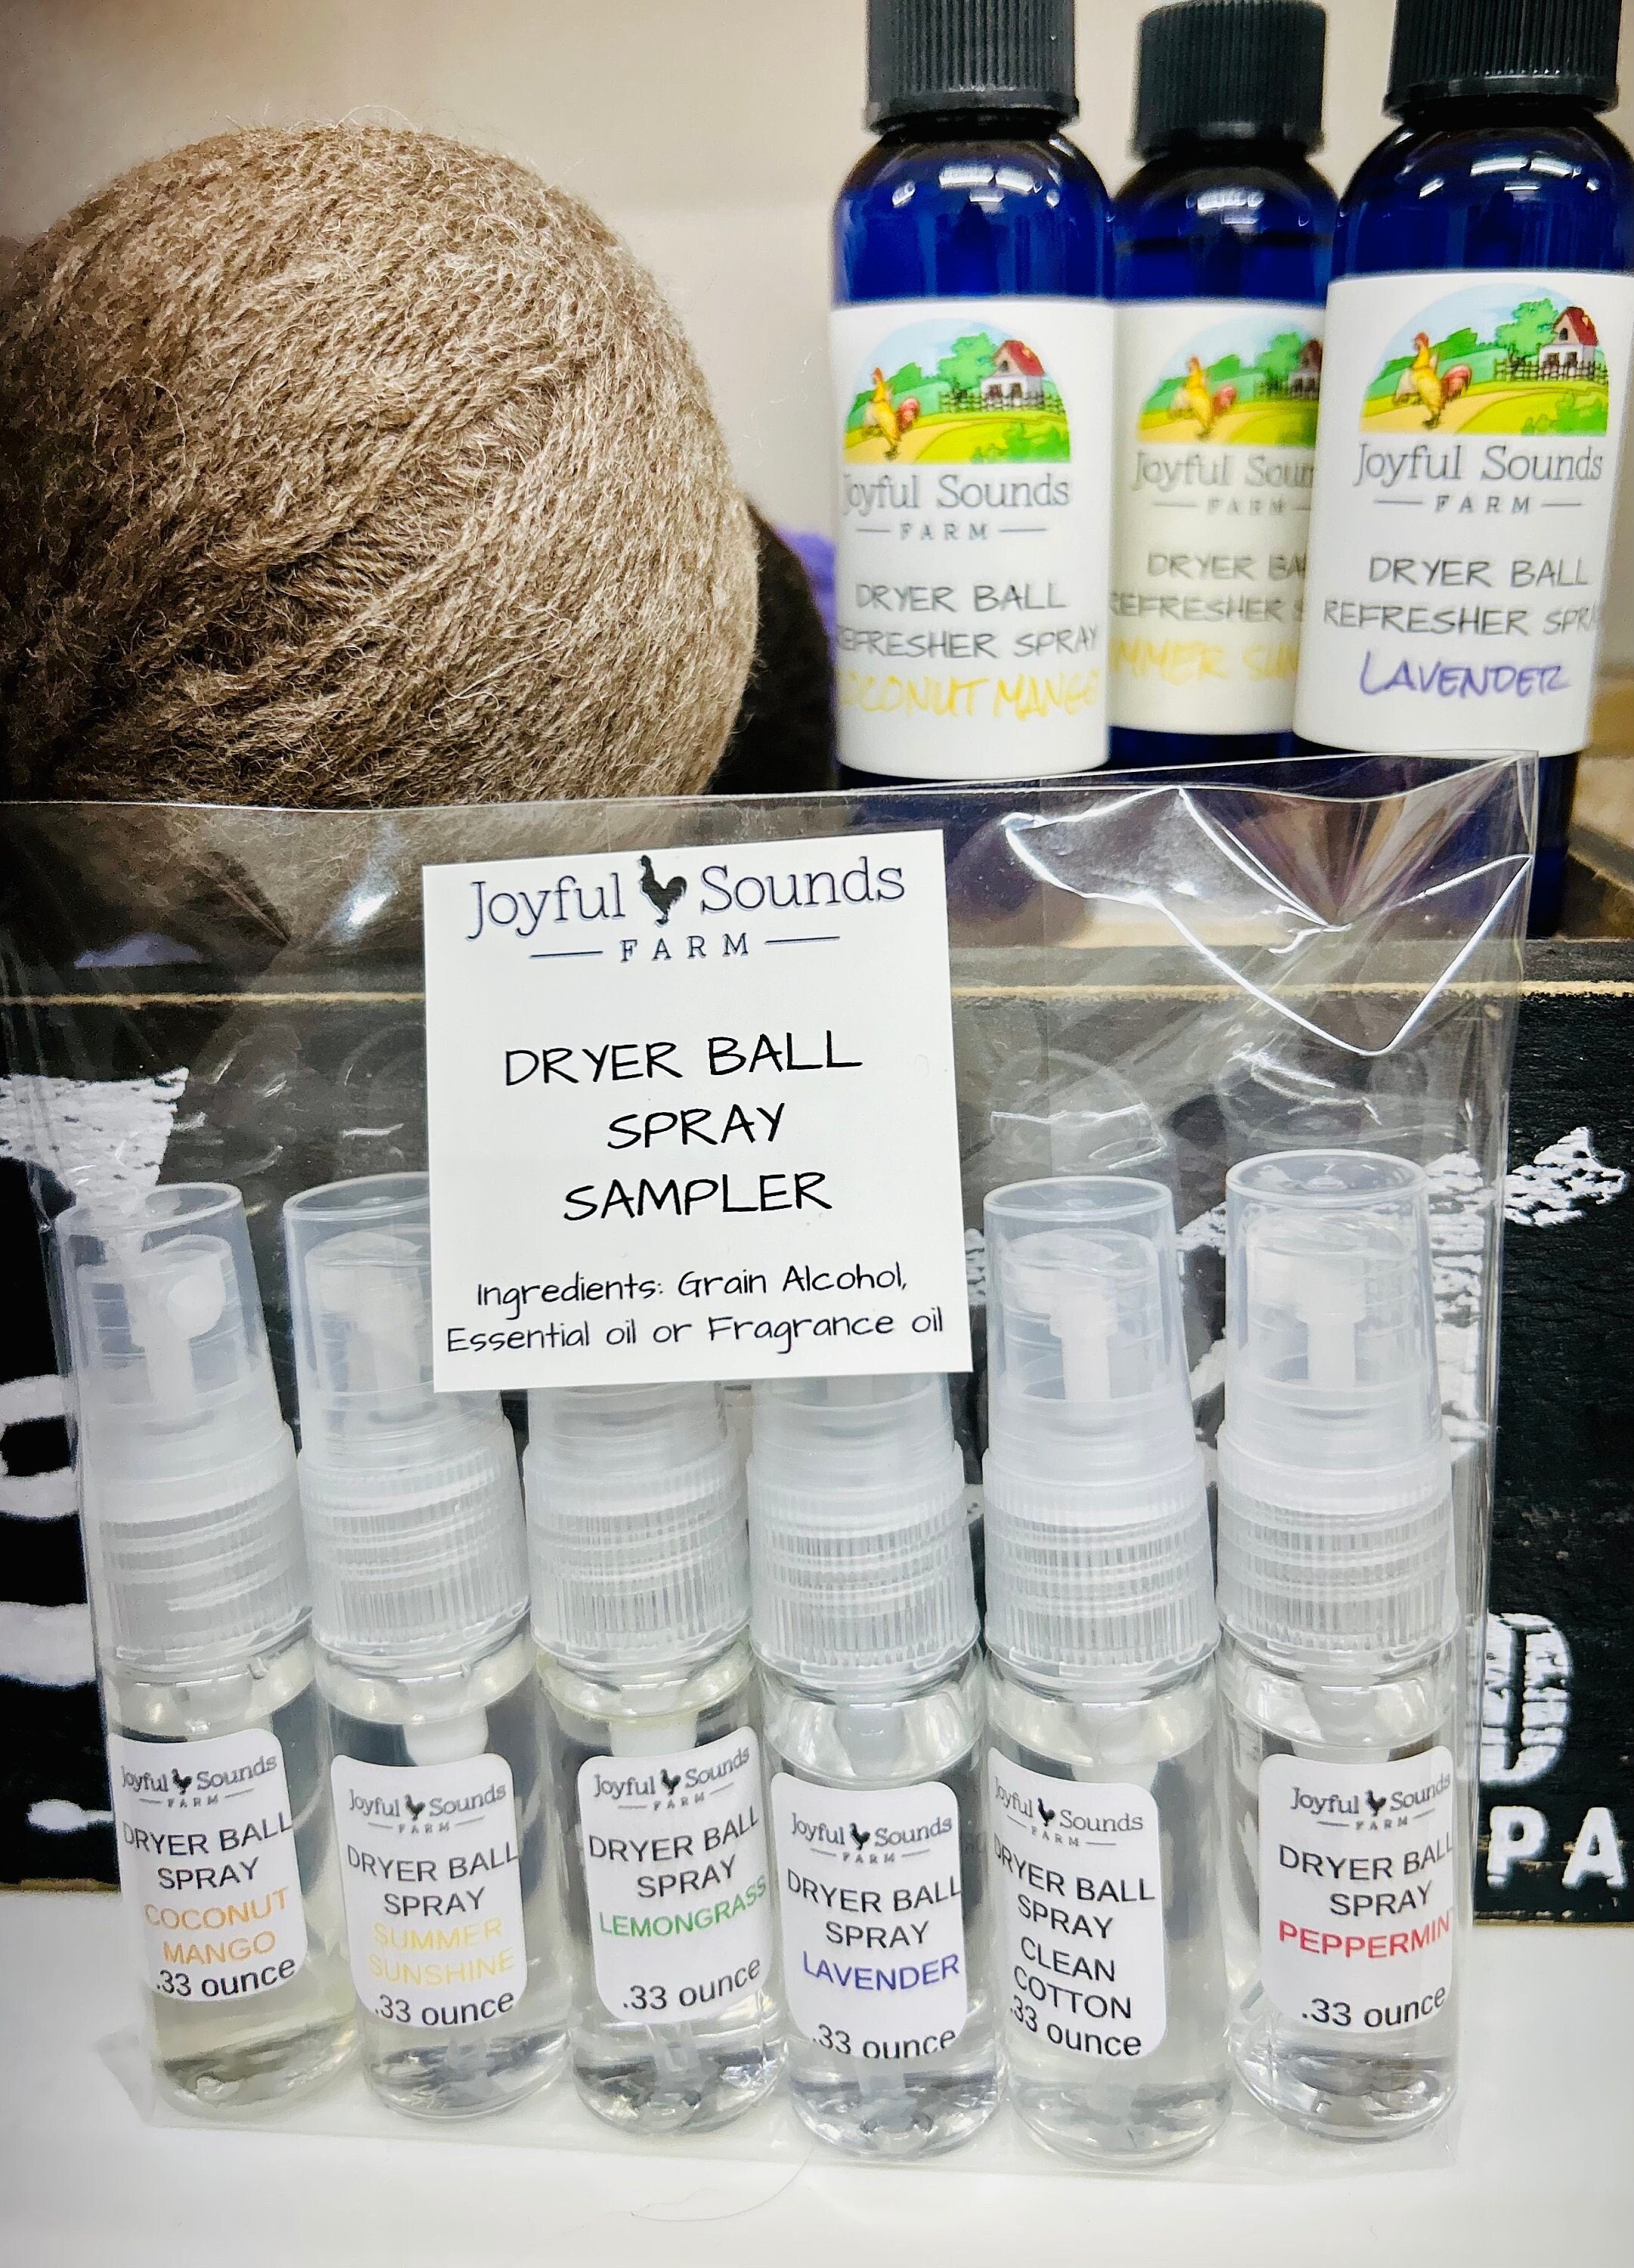 Wool Dryer Balls with Cedar Wood & Eucalyptus Essential Oils